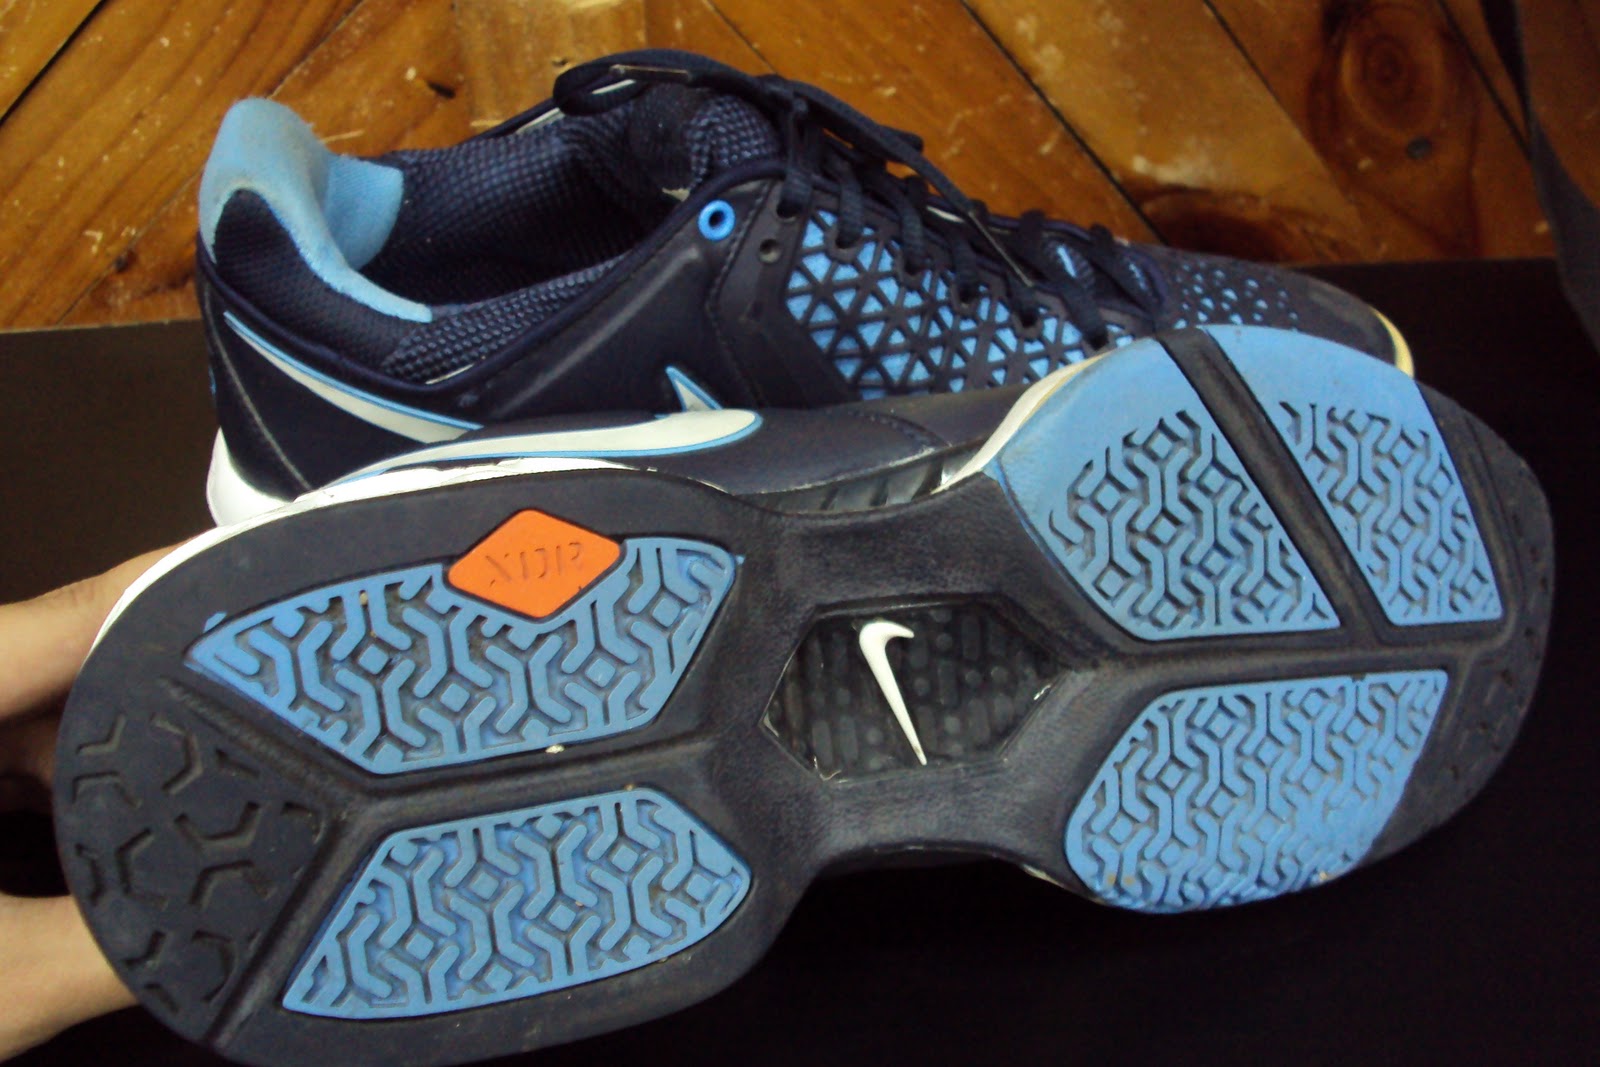 bArAnGaN Baru & terPaKai: Nike Dragon Tennis Shoe (SOLD)